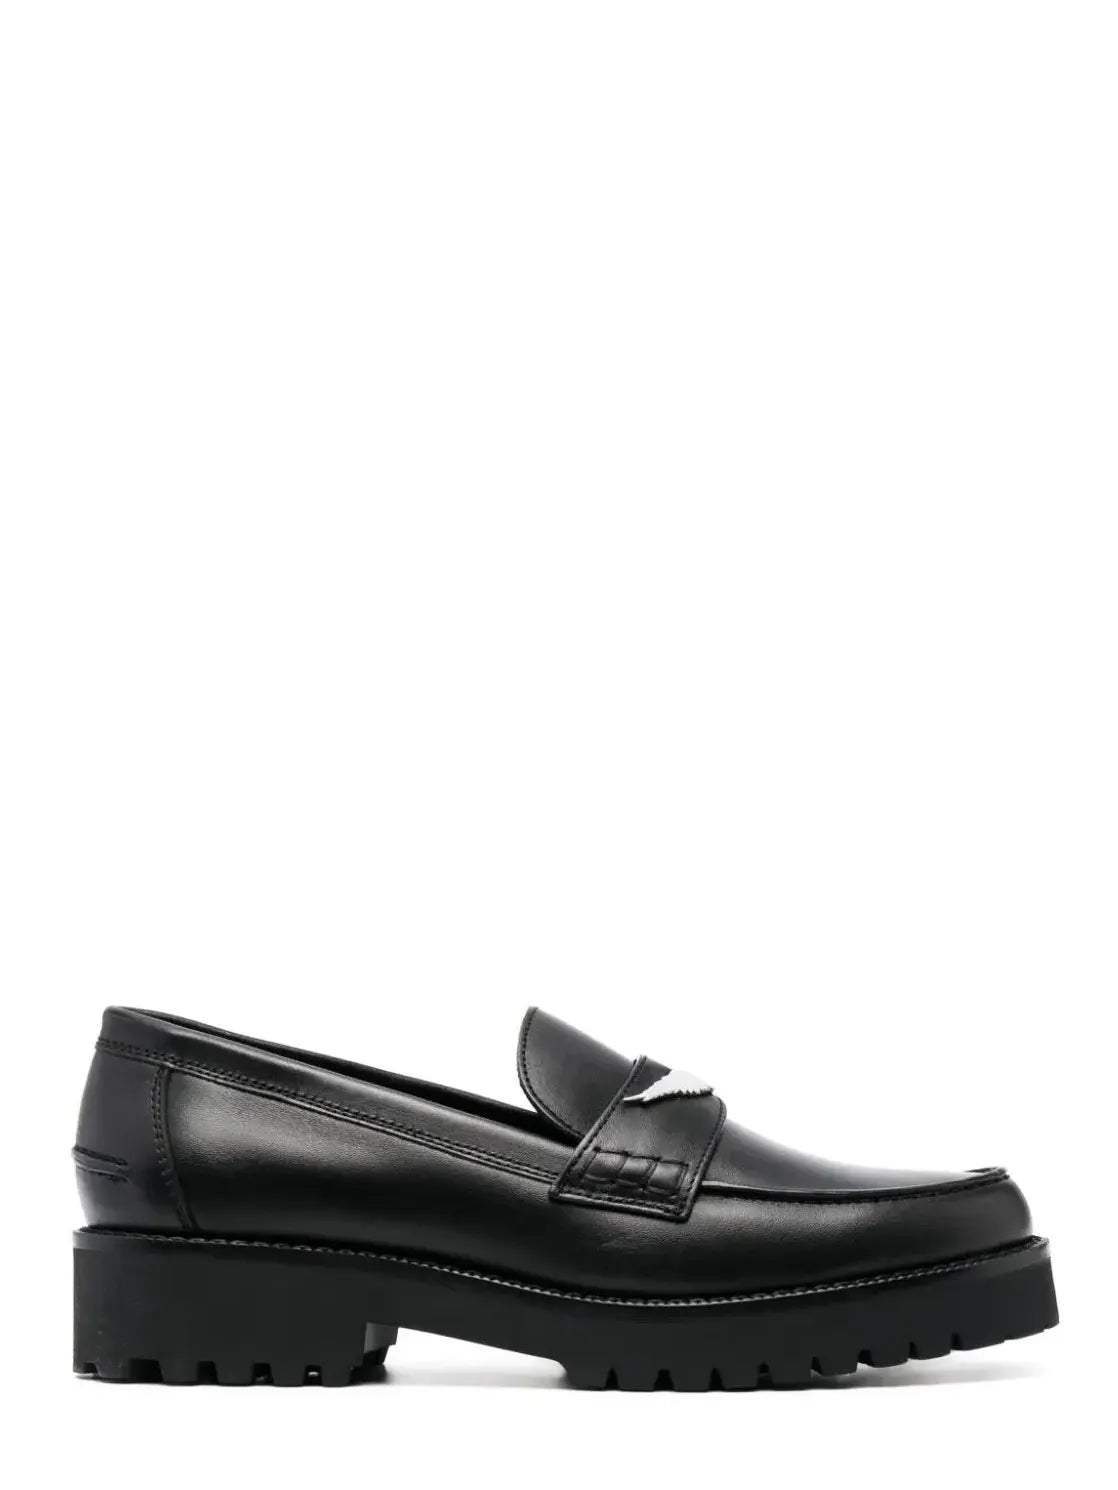 JOECASSIN SEMY-SHINY CALFSKIN boat shoes, black